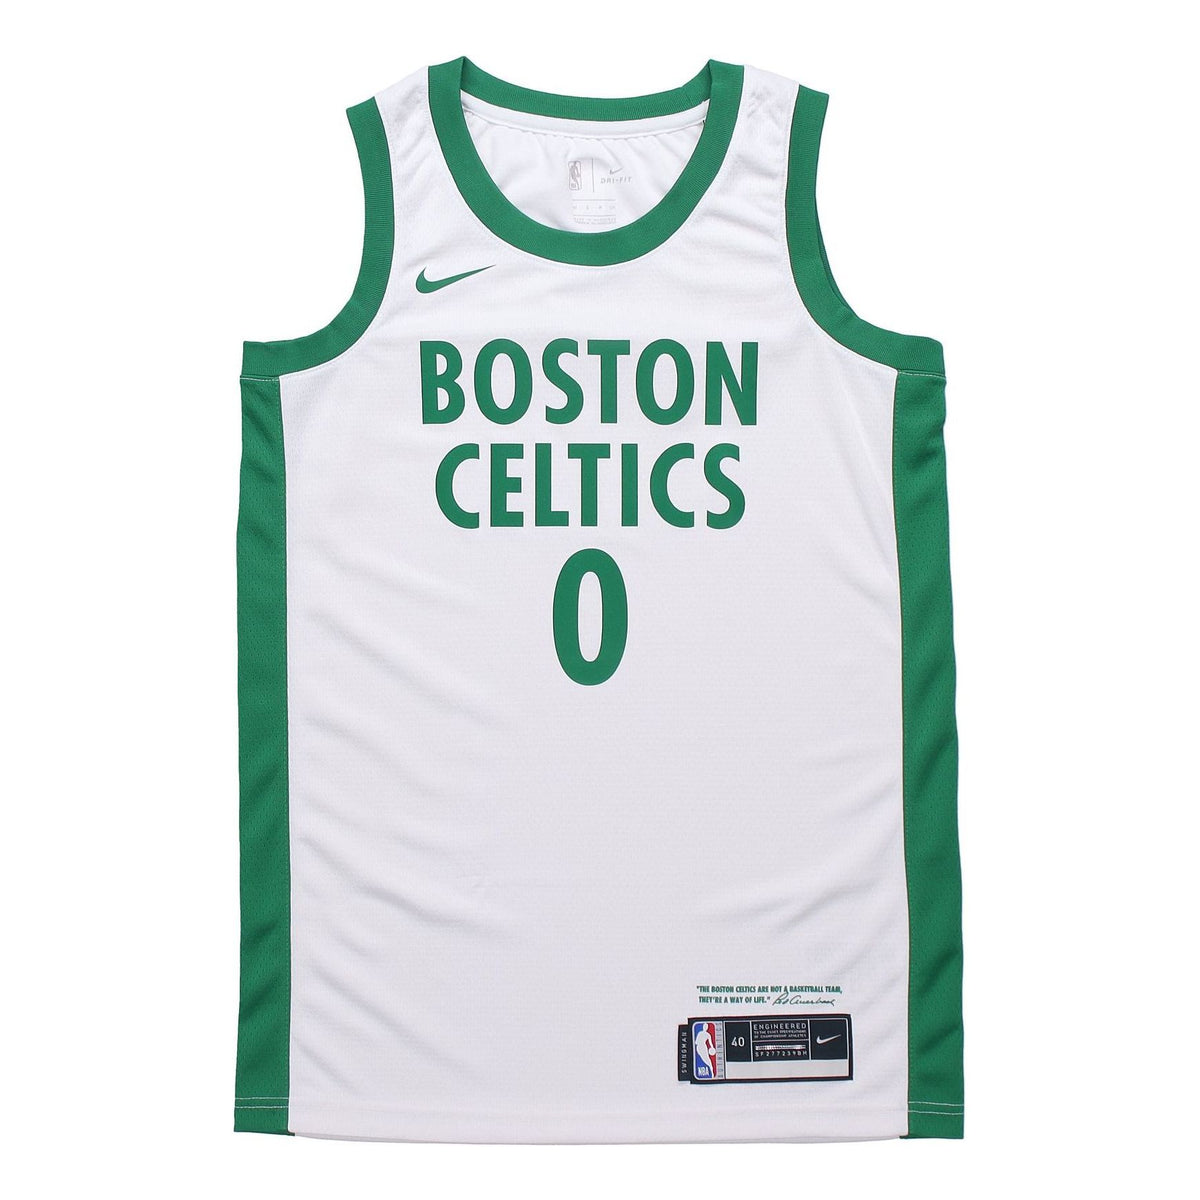 Boston Celtics Jayson Tatum city edition nba authentic jersey Large